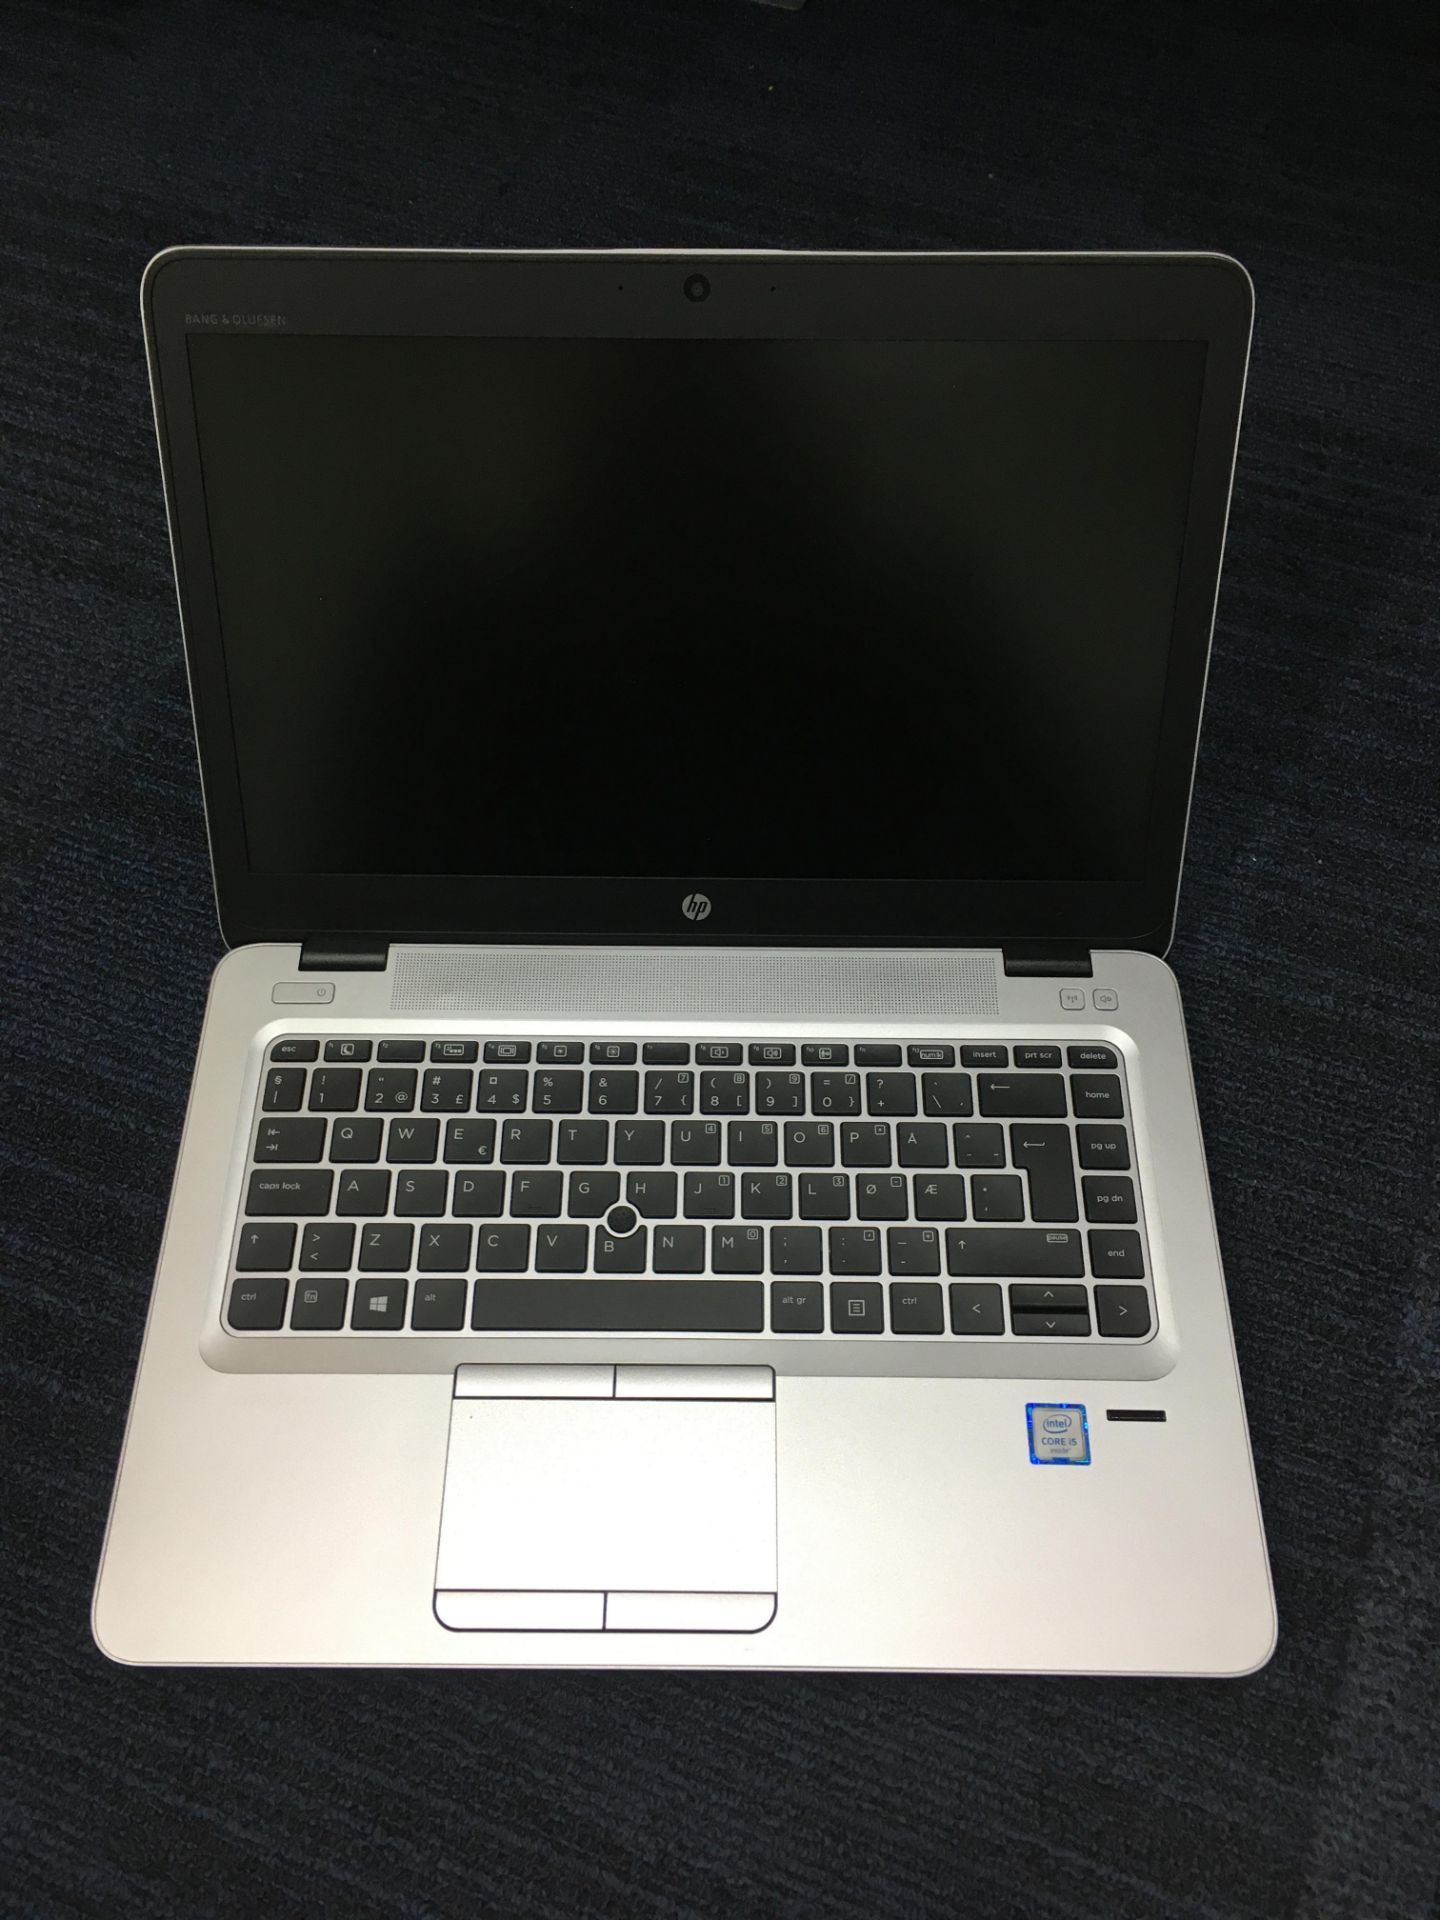 HP EliteBook 840 G3 core i5 white label - Image 2 of 4